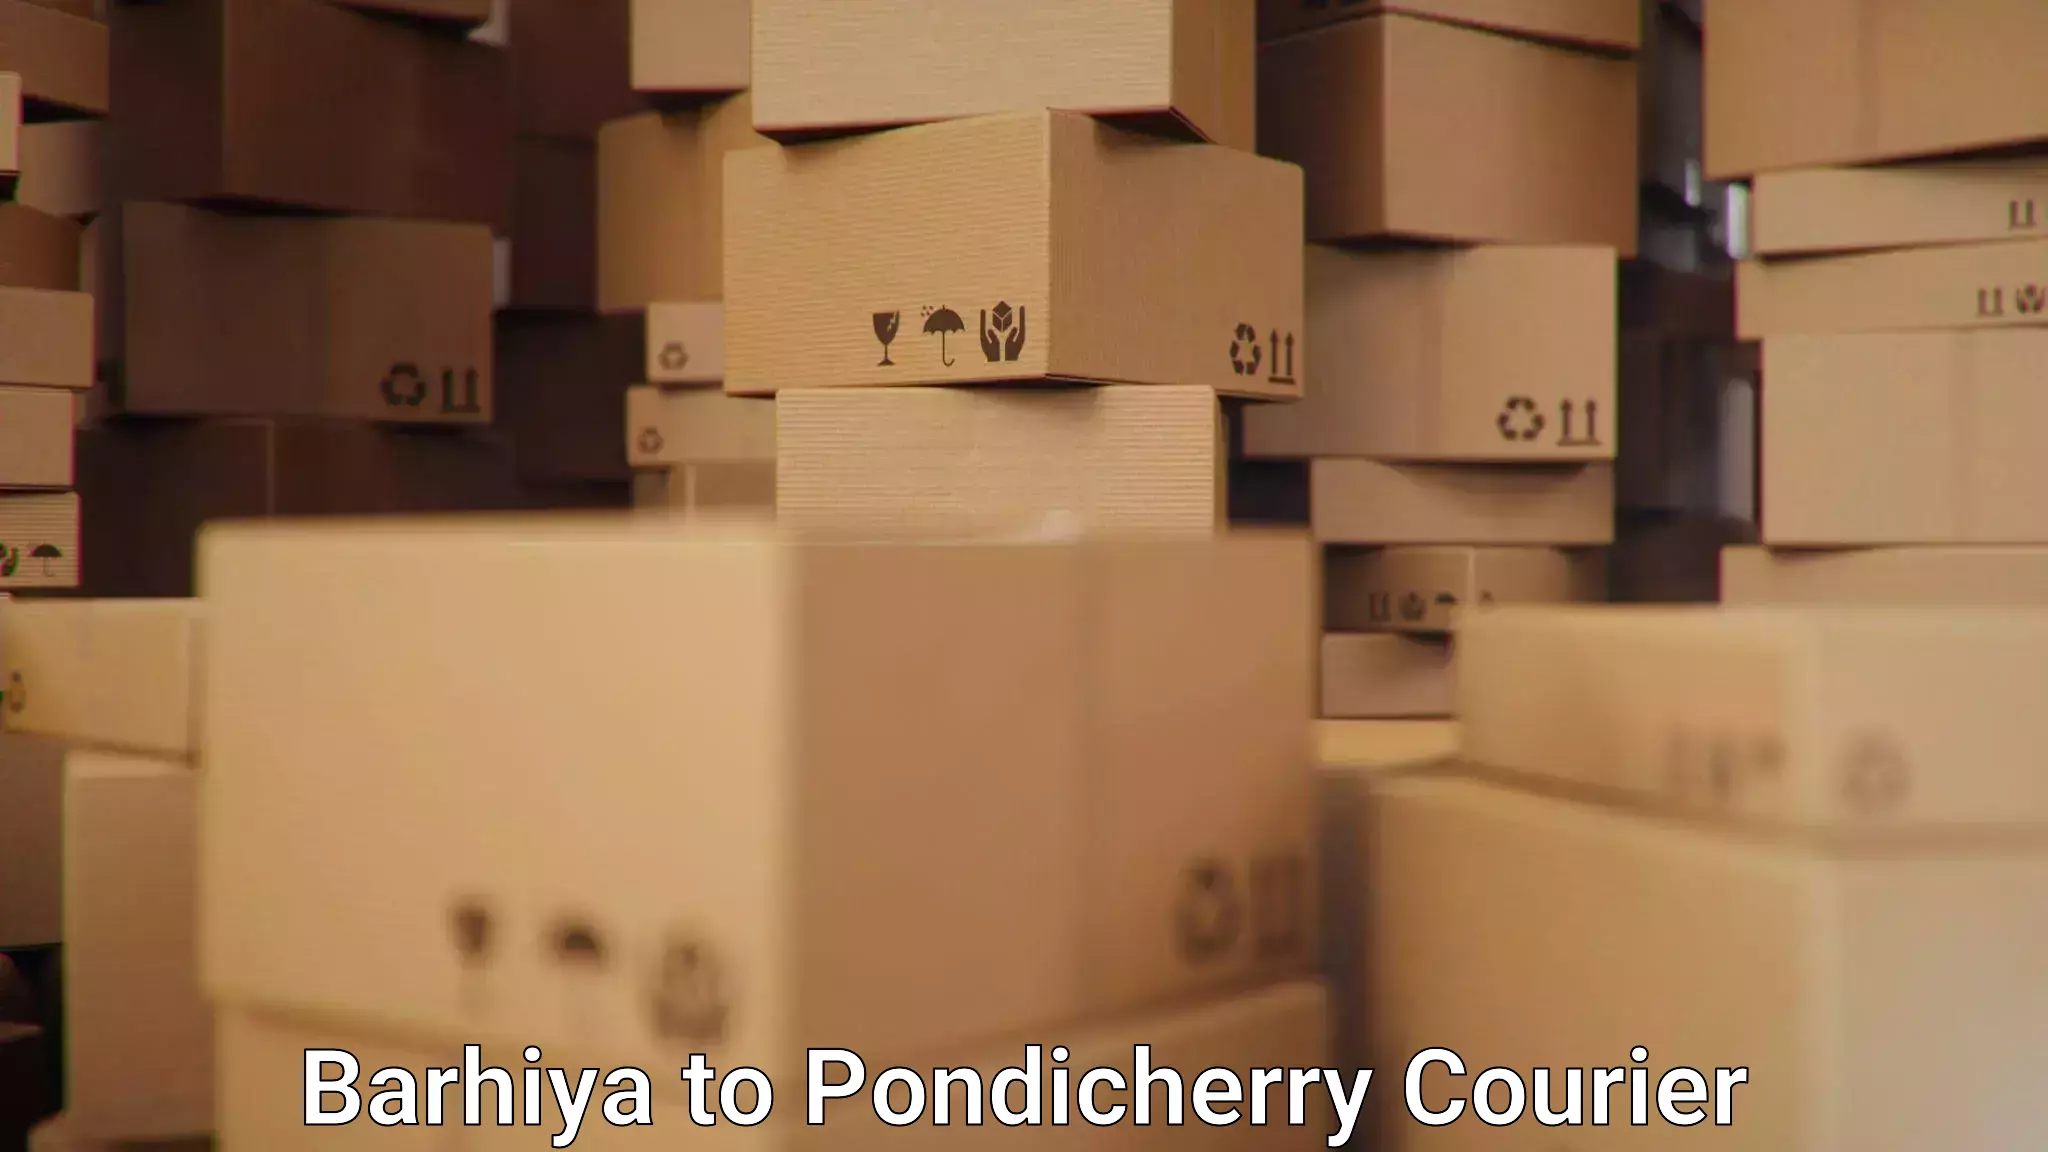 Courier service innovation Barhiya to Pondicherry